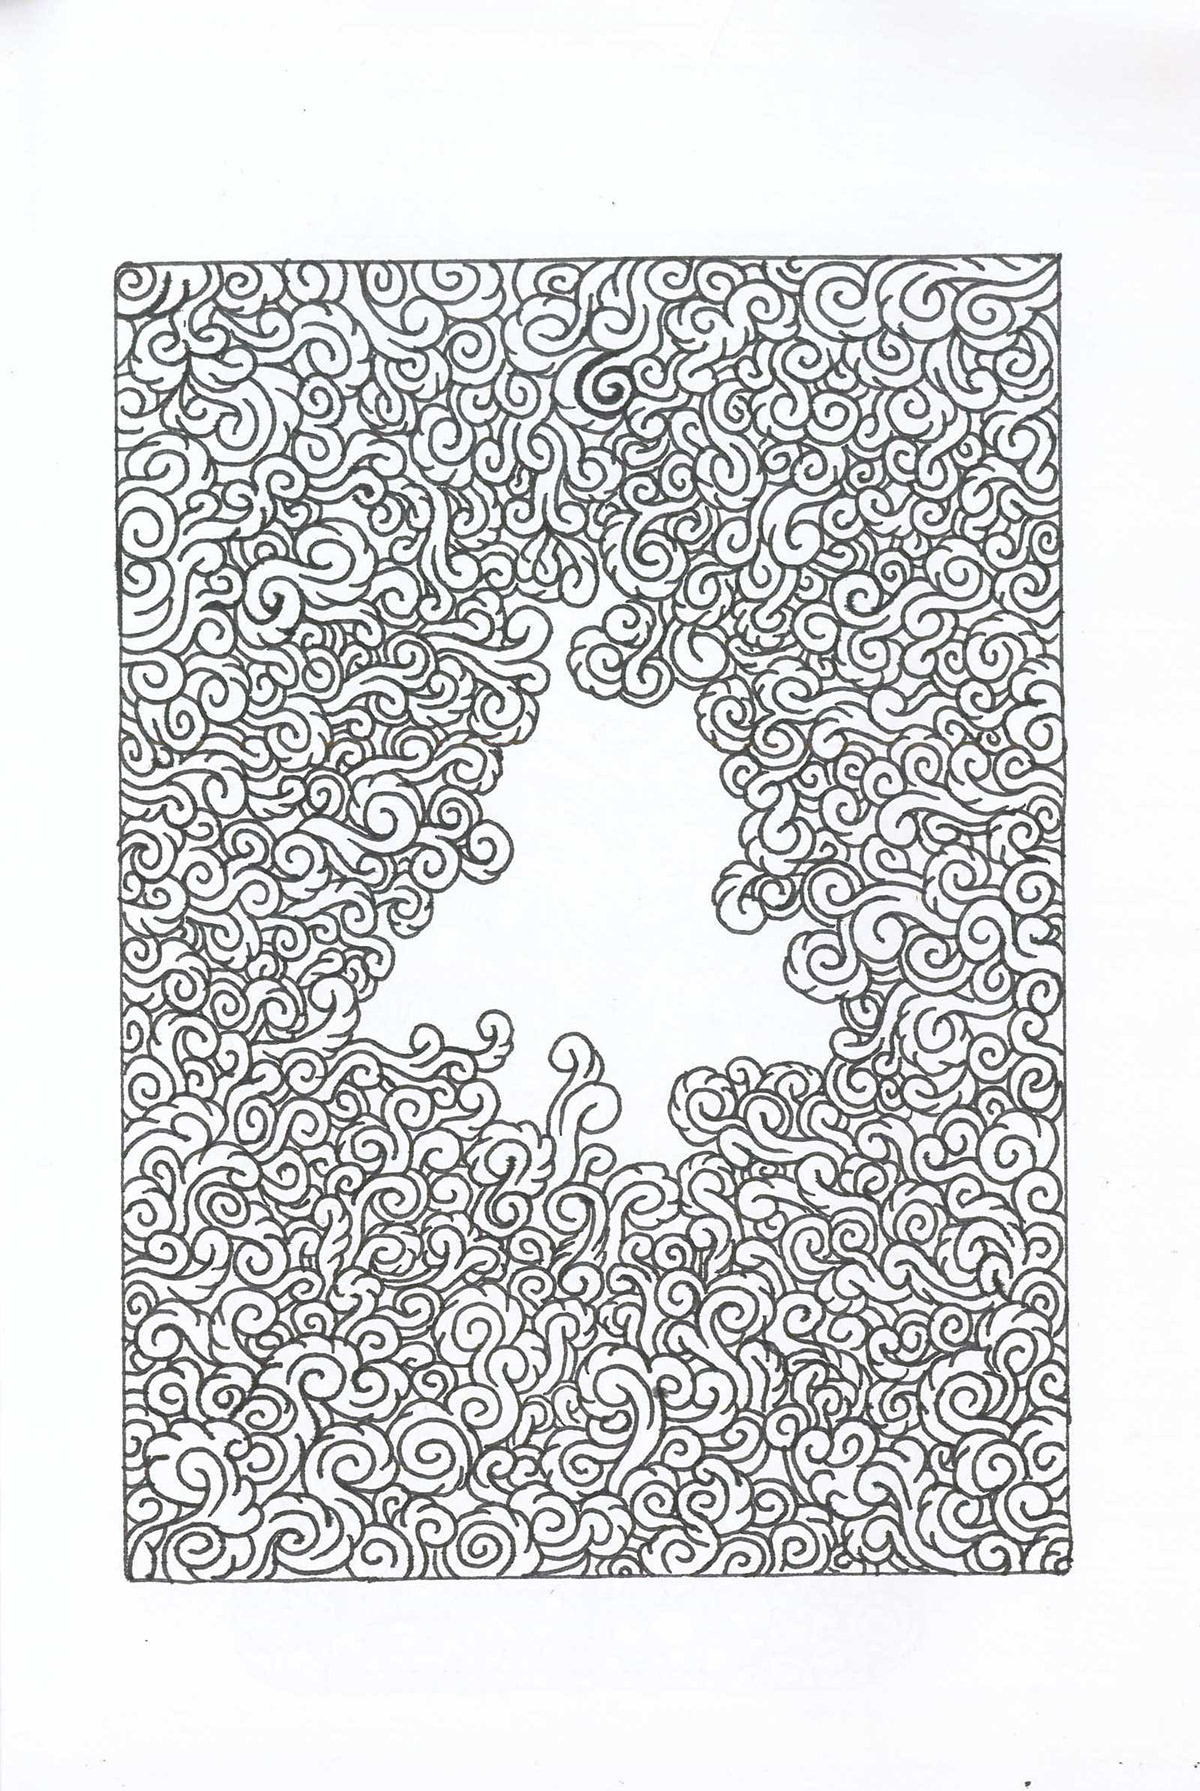 zentangle meditativeart fineline Patterns Swirls patterndesign flowerpattern abstract linework repetitive